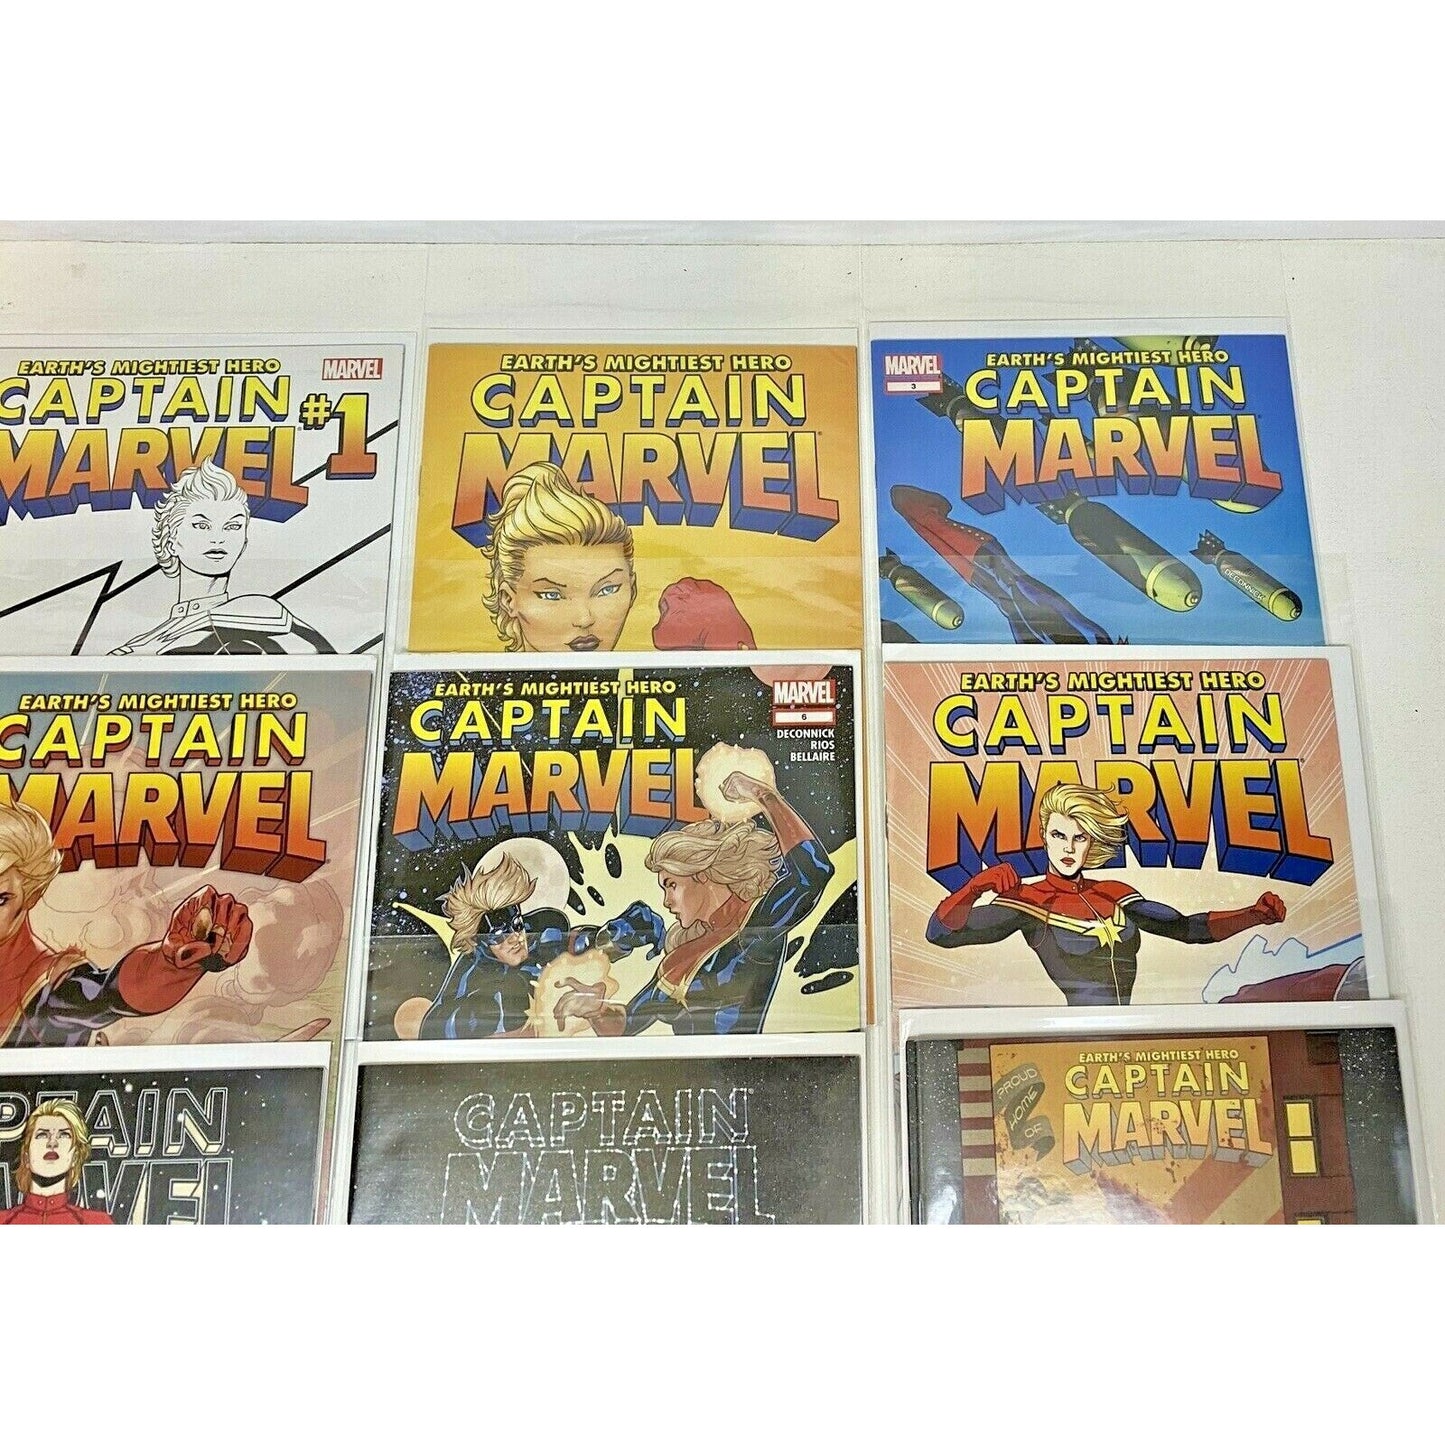 Marvel Comics - Earth's Mightiest Hero: Captain Marvel #1-12 + Variant & Doubles